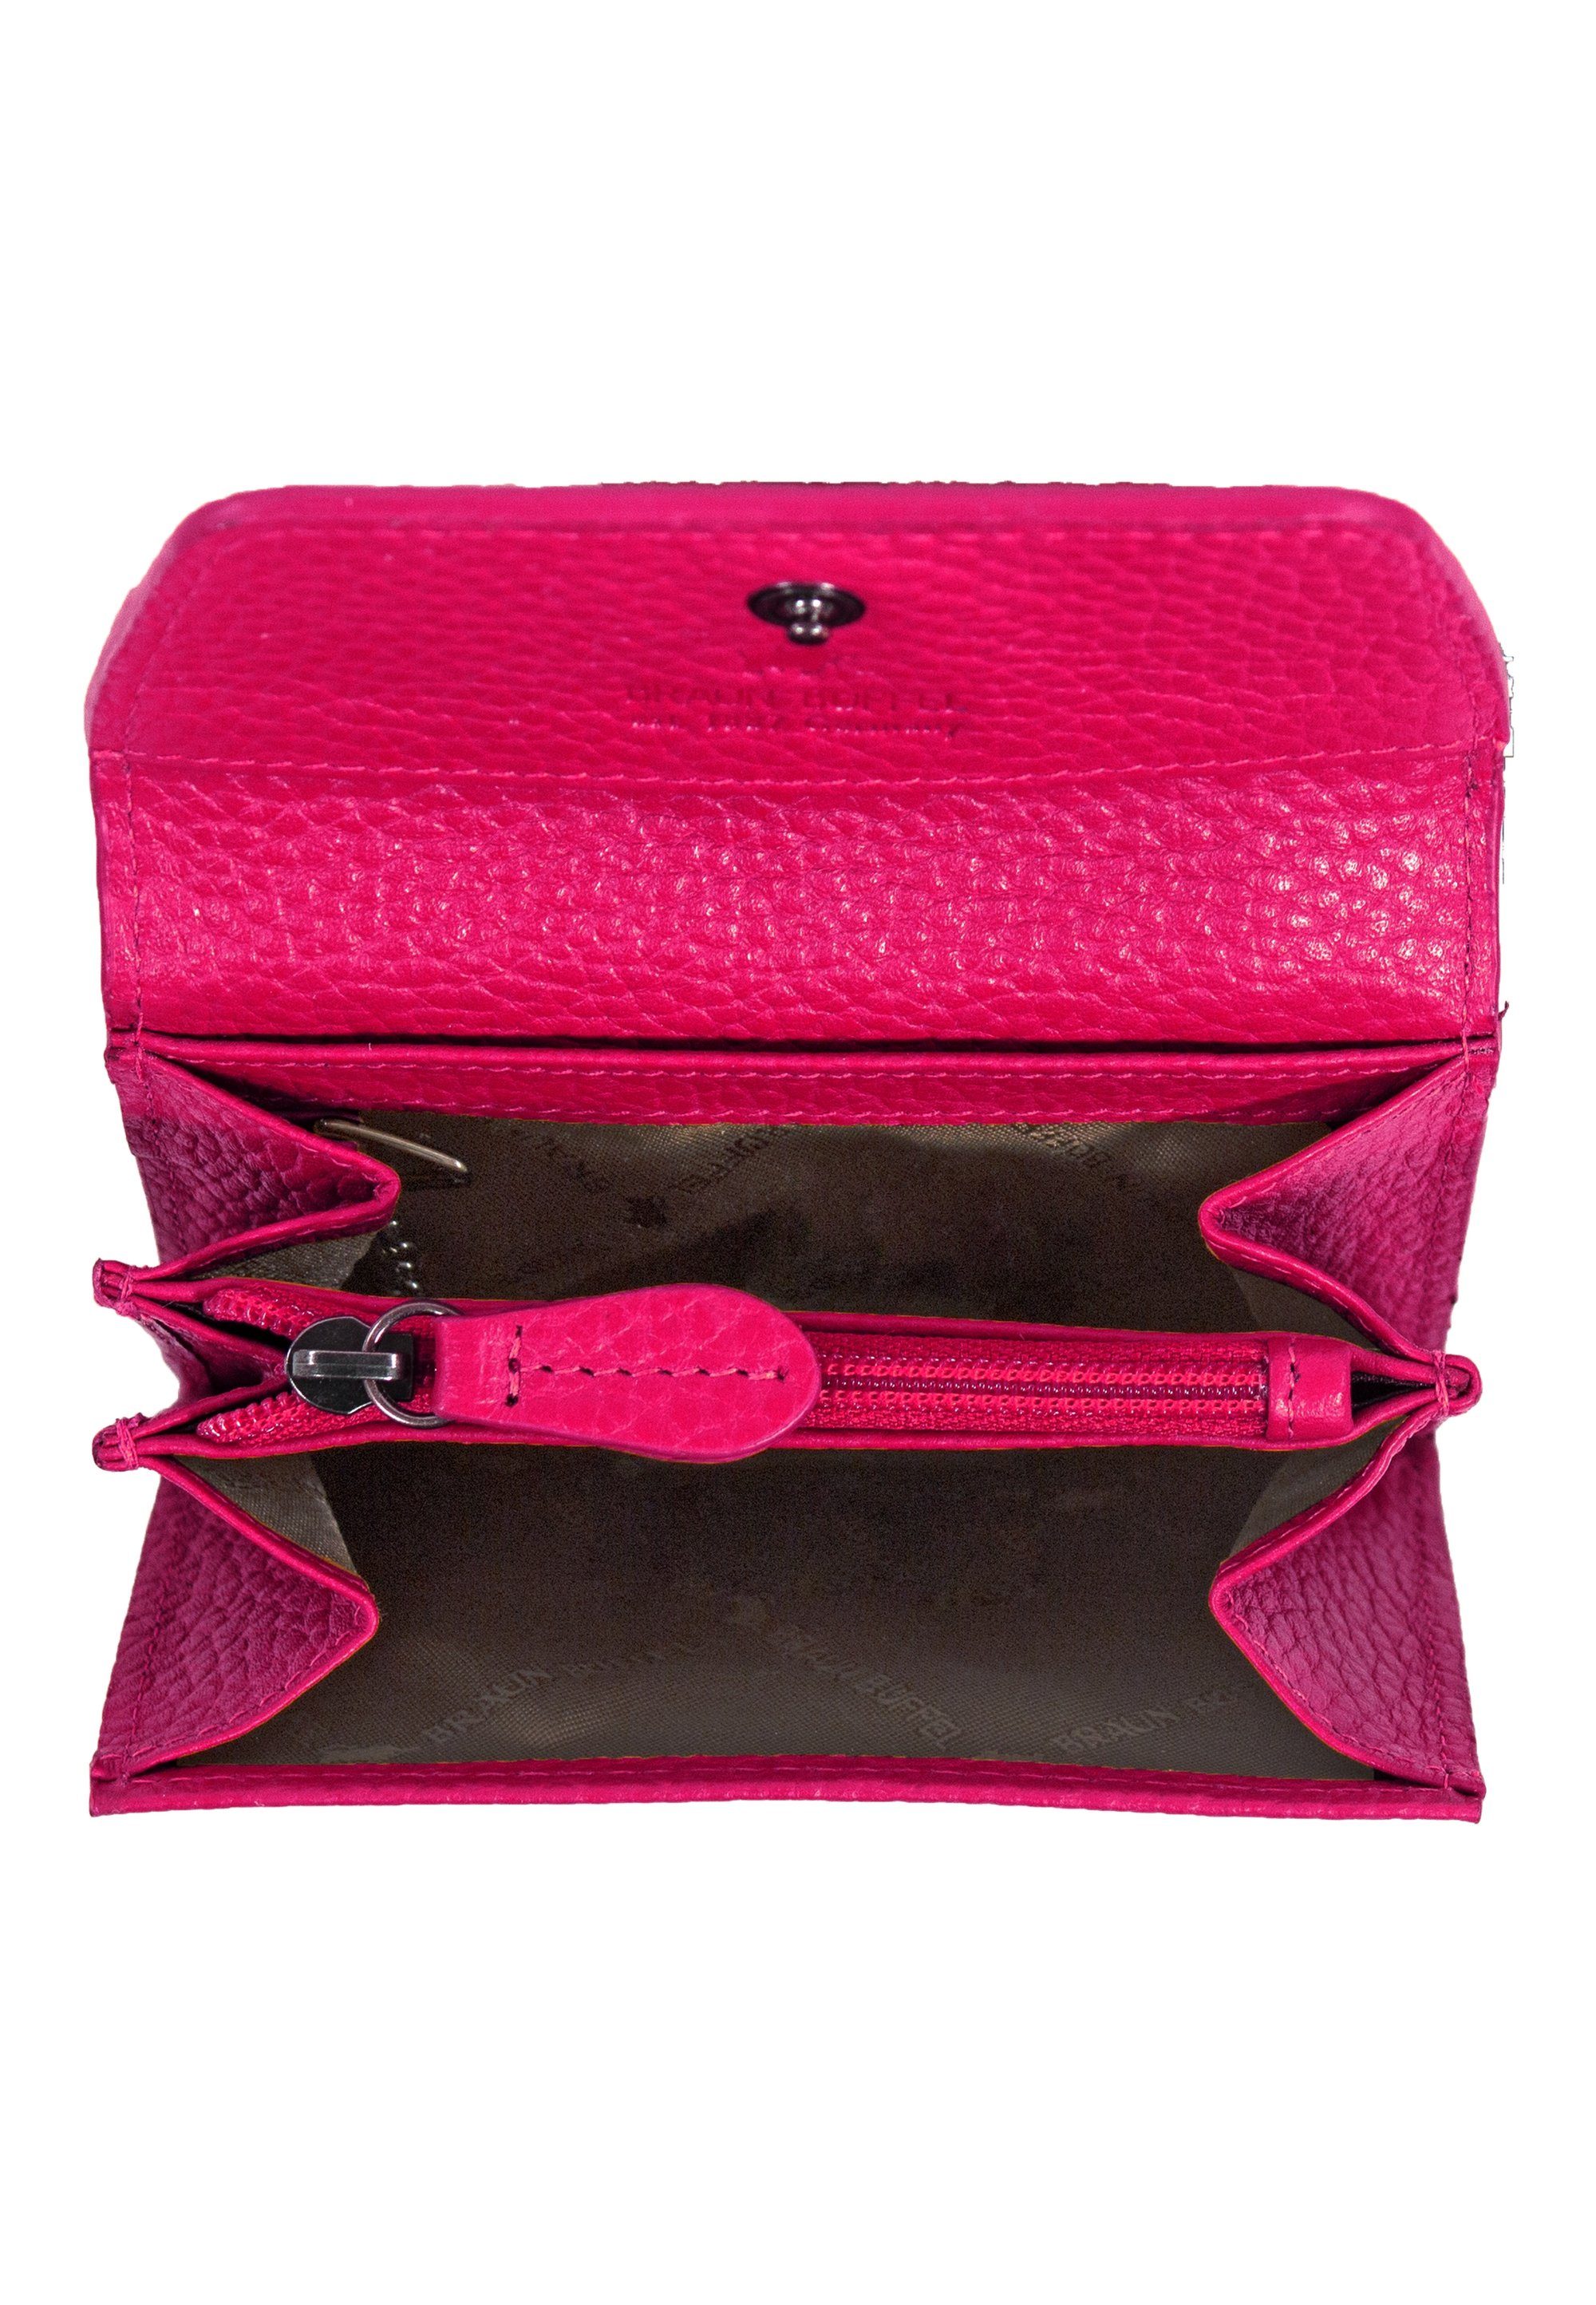 Schlüsselring pink Mini mit Braun LUISE Geldbörse, Mini Büffel Geldbörse